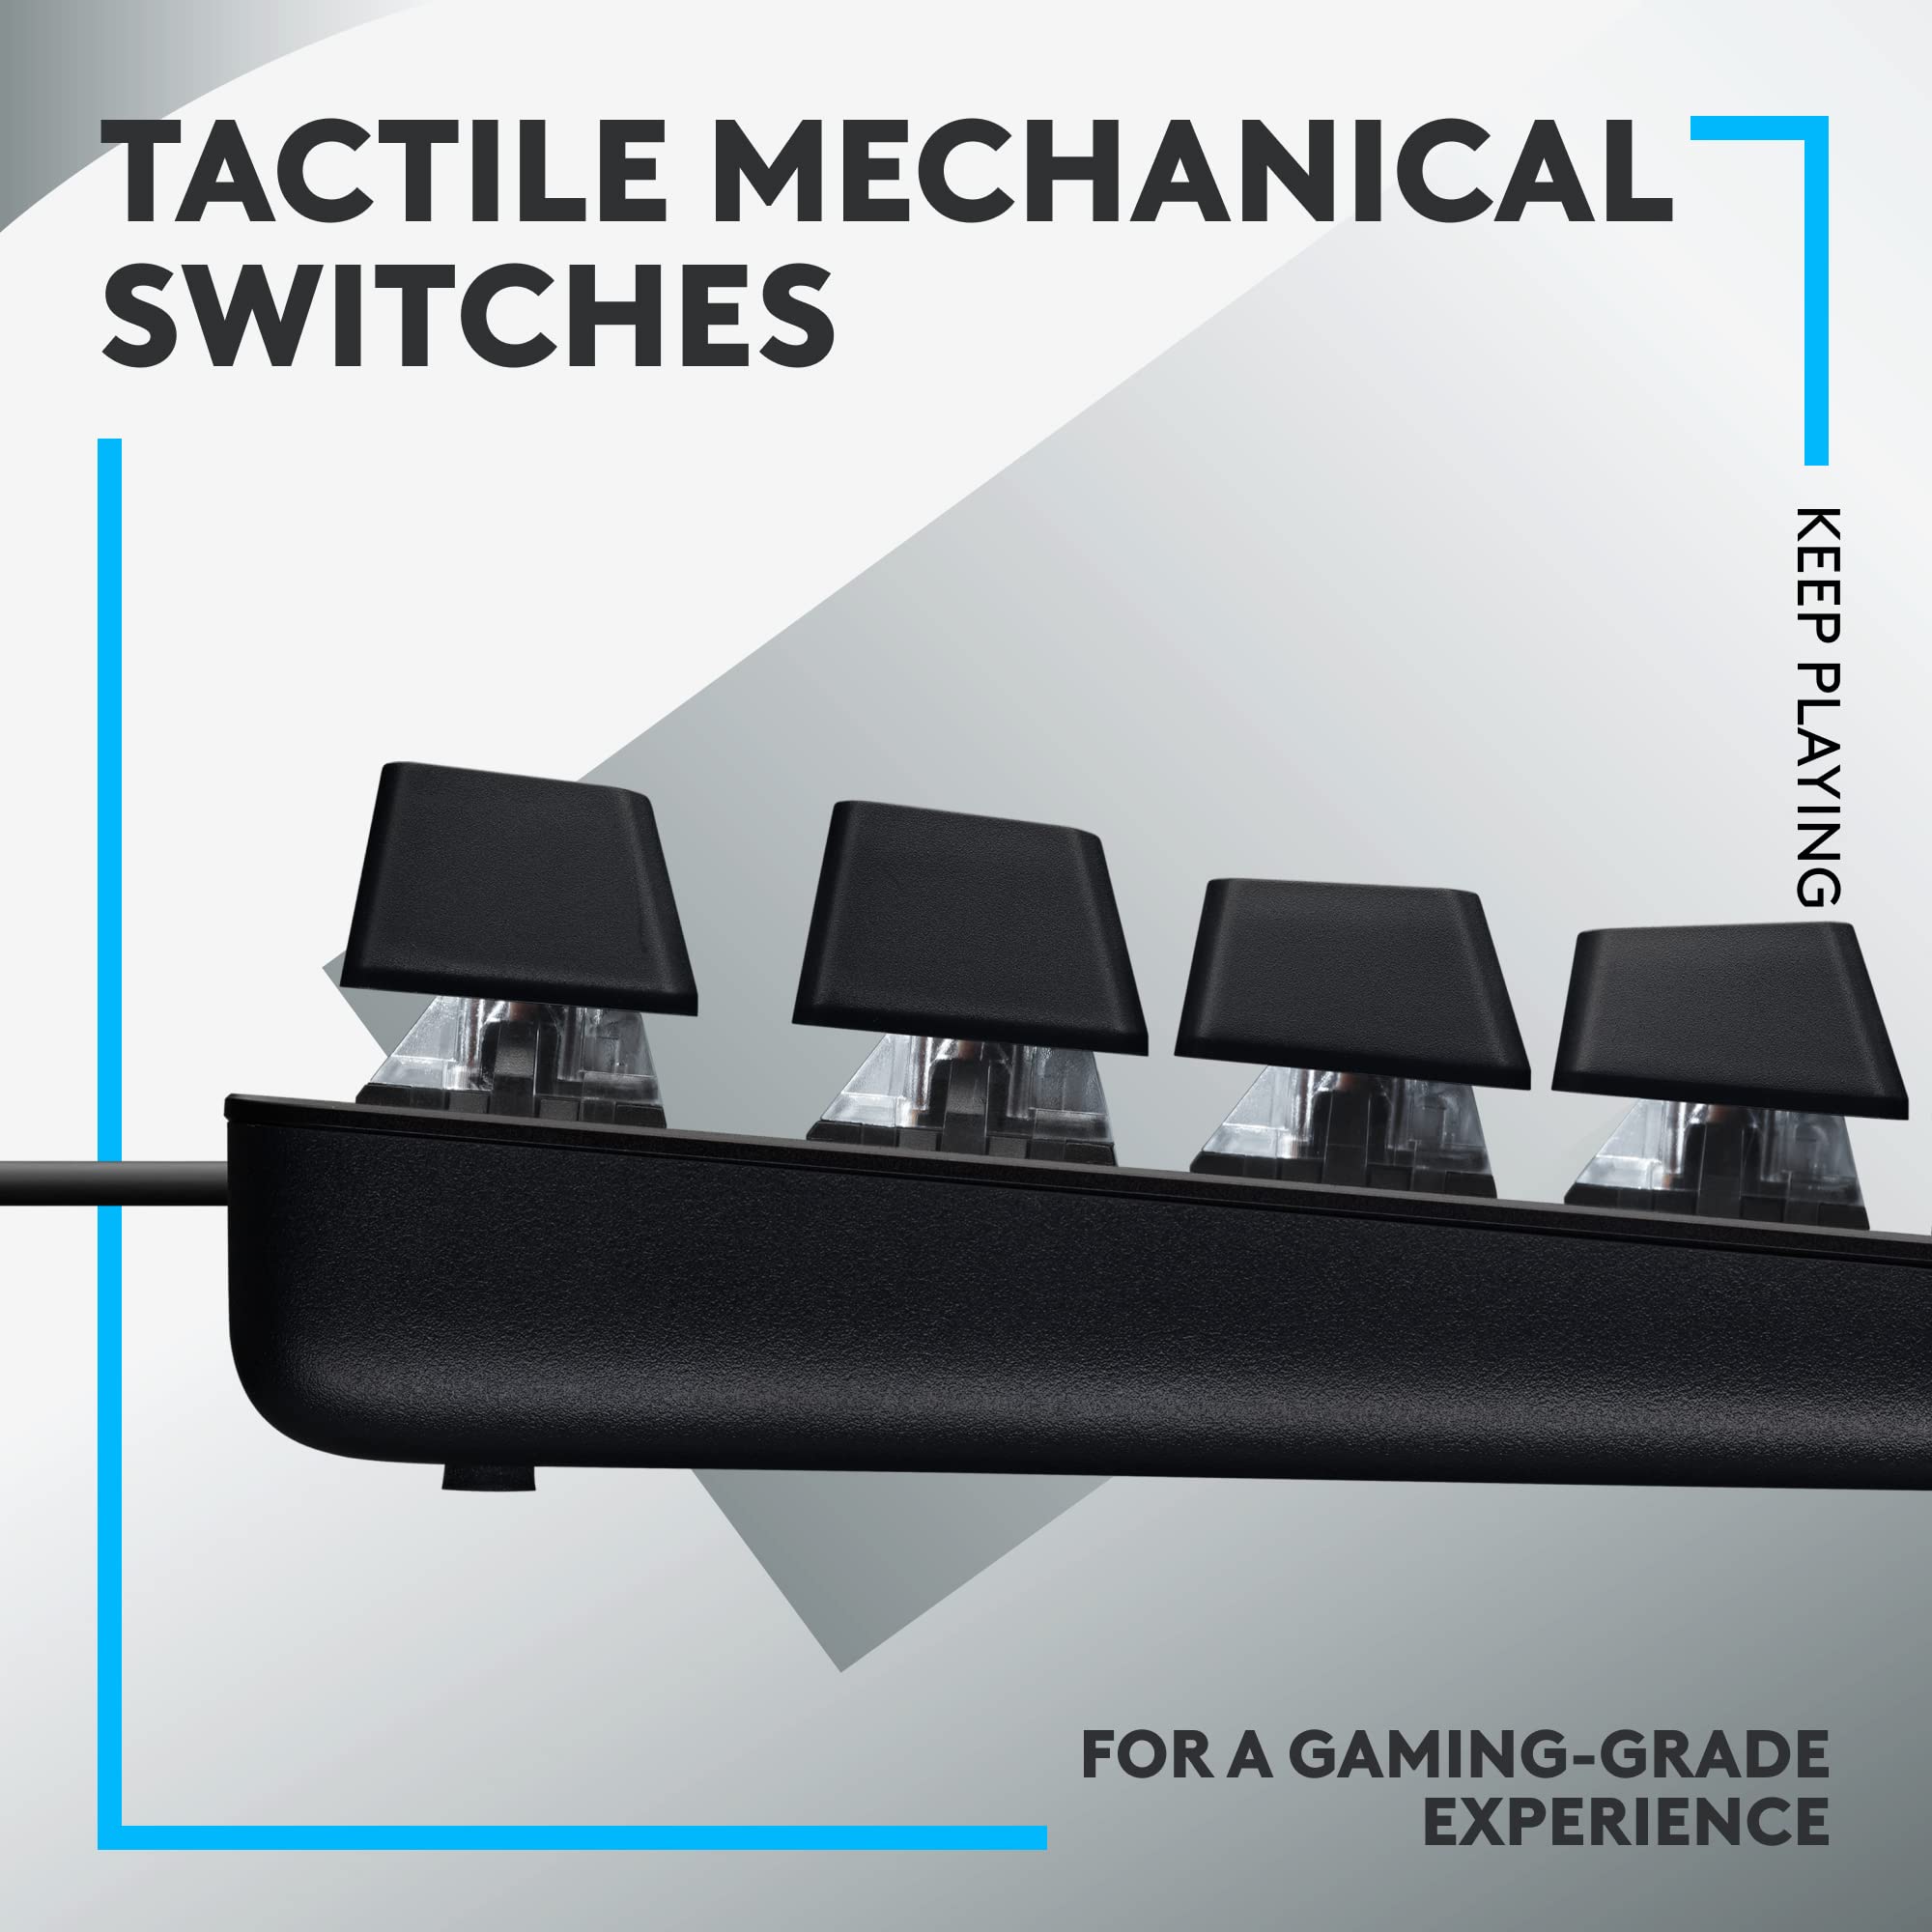 Logitech G413 SE Mechanical Gaming Keyboard and Logitech G502 HERO High Performance Gaming Mouse Bundle